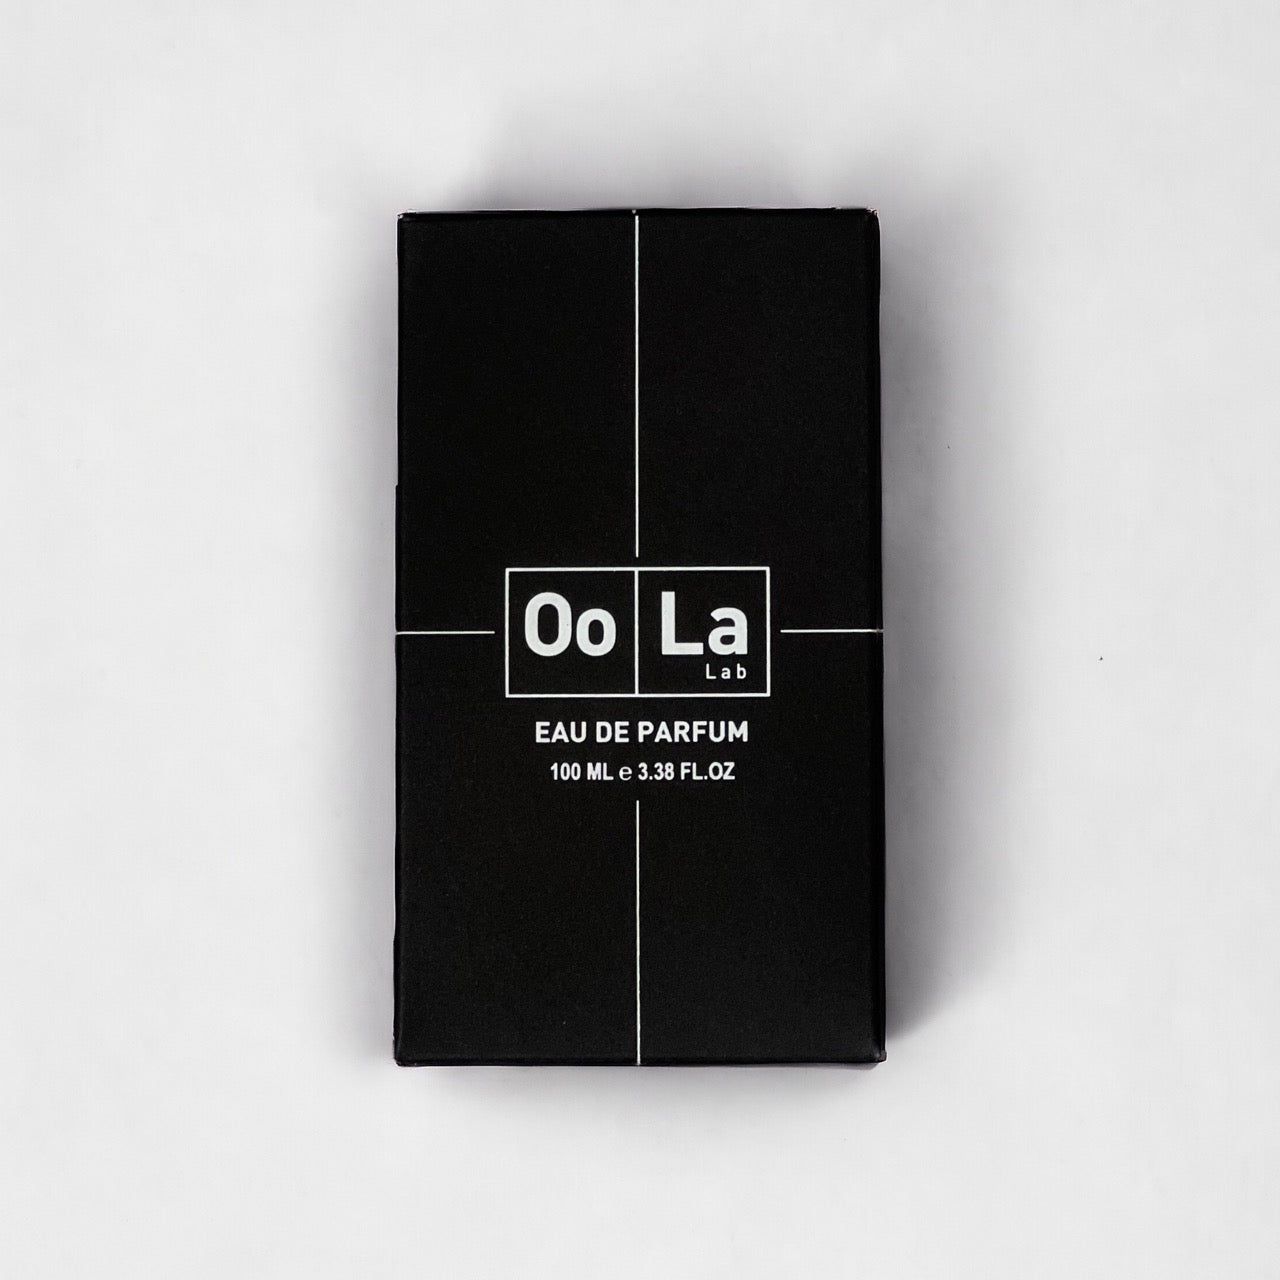 WOOD Eau de Parfum (100ml) - Oo La Lab